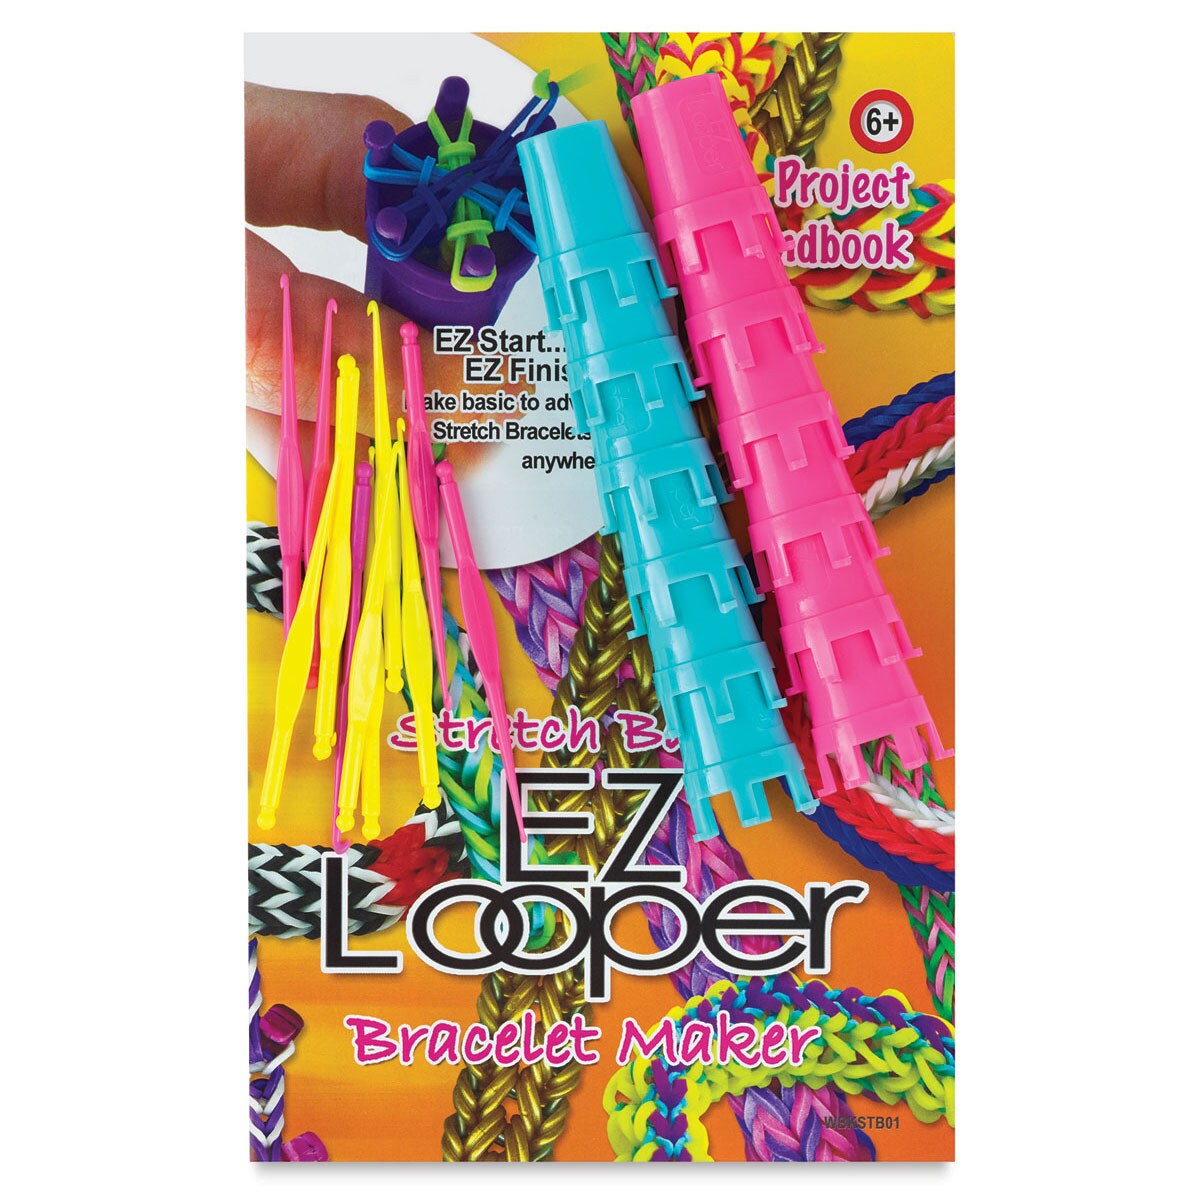 EZ Looper Bracelet Kit